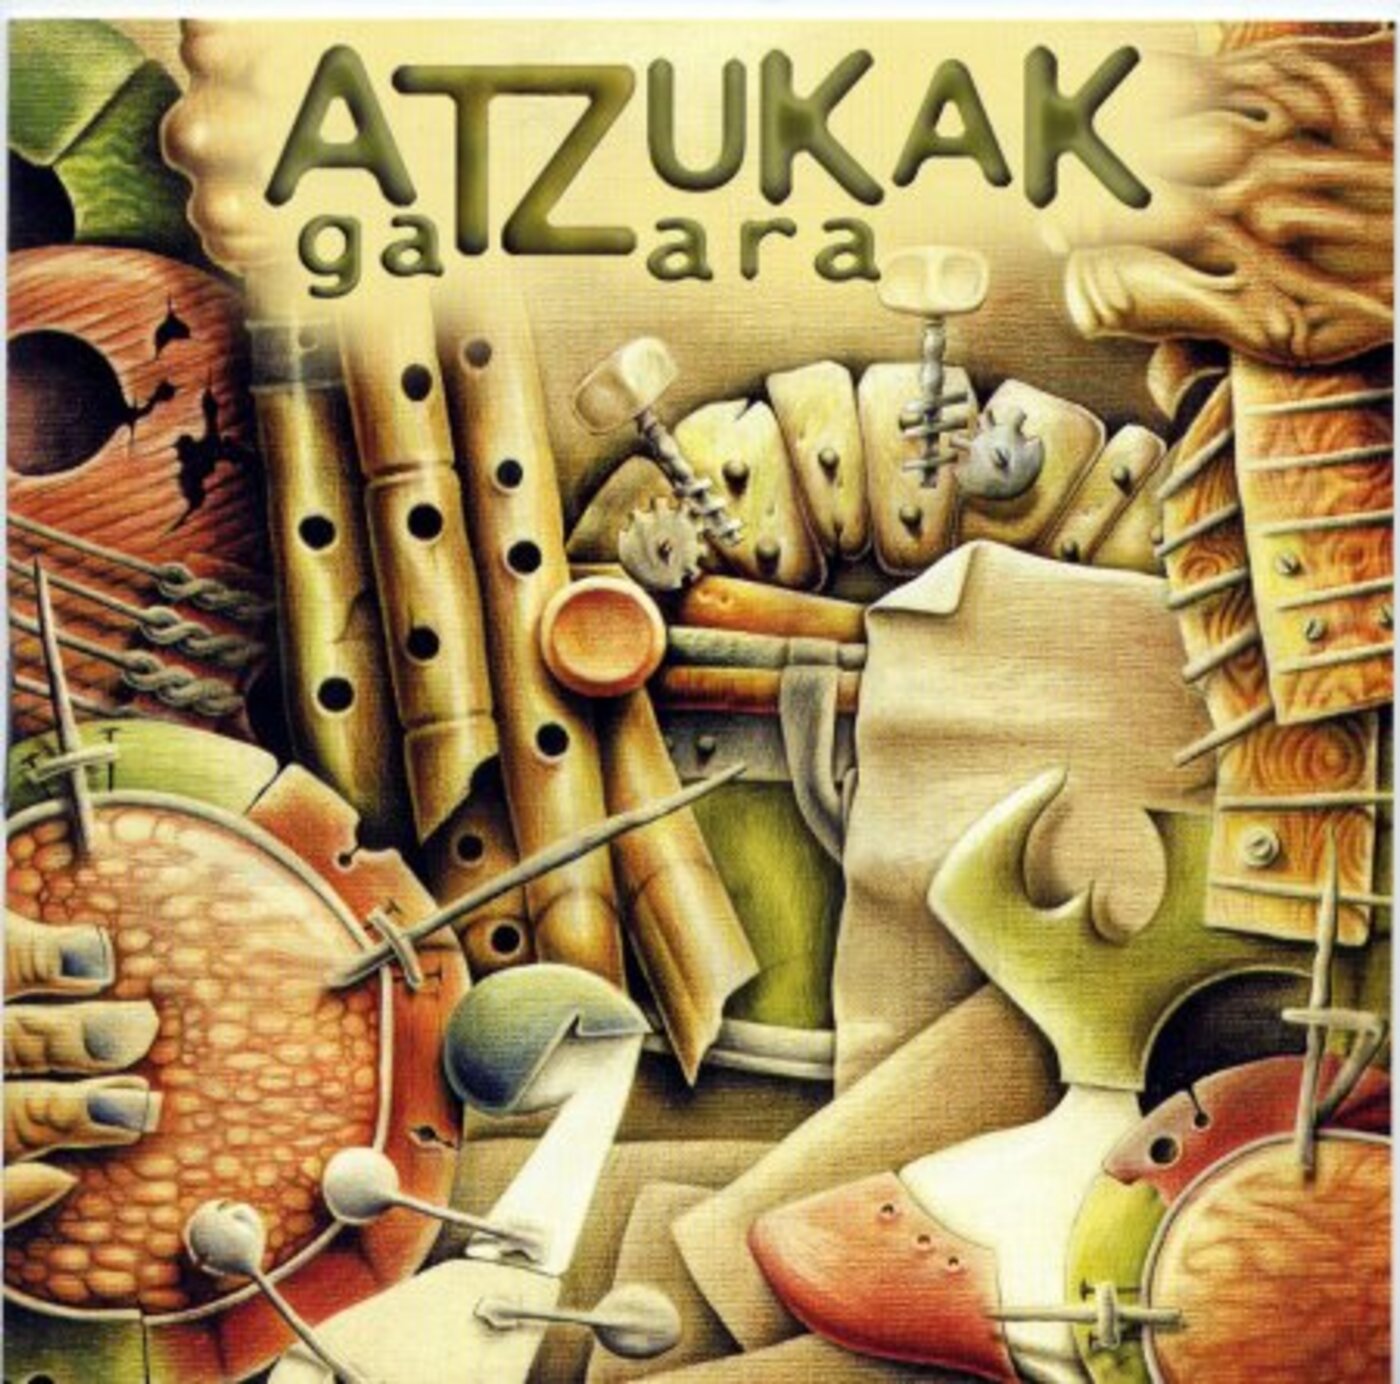 Atzukak - Gatzara | musica en valencià